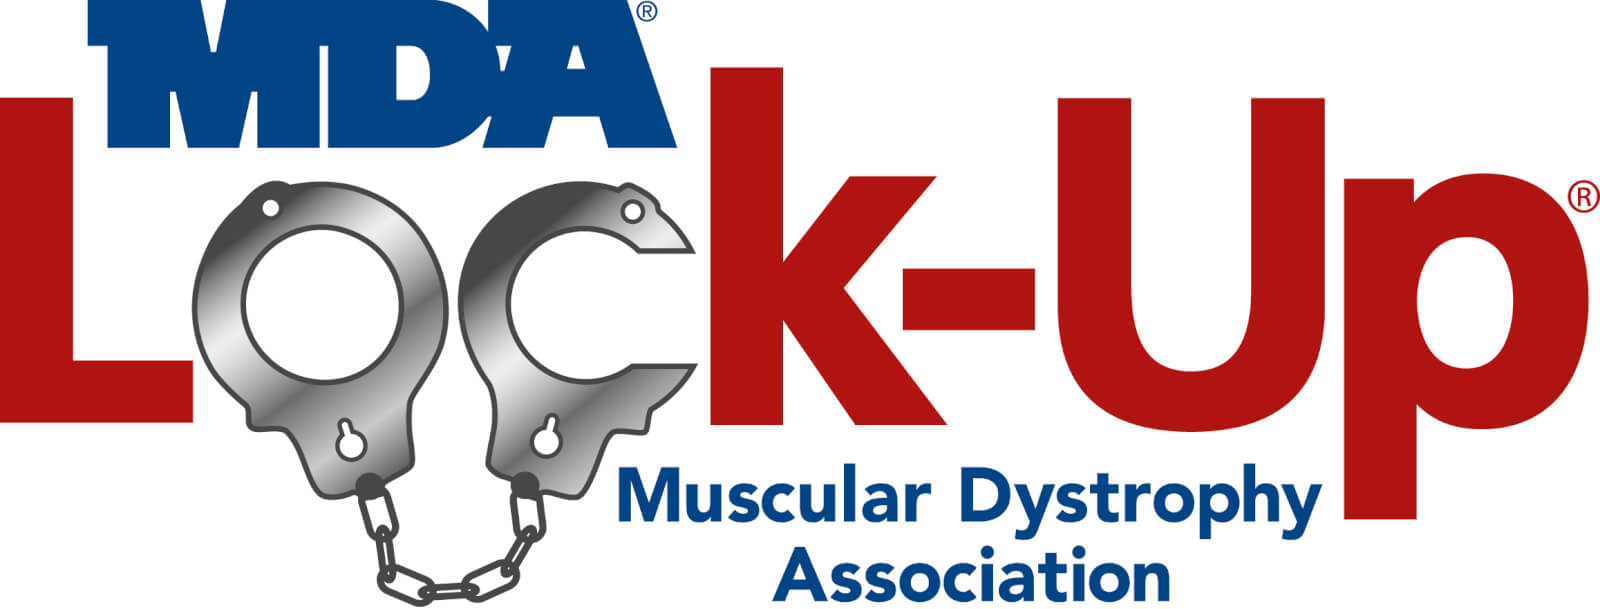 Muscular Dystrophy Association Lock-Up fundraiser